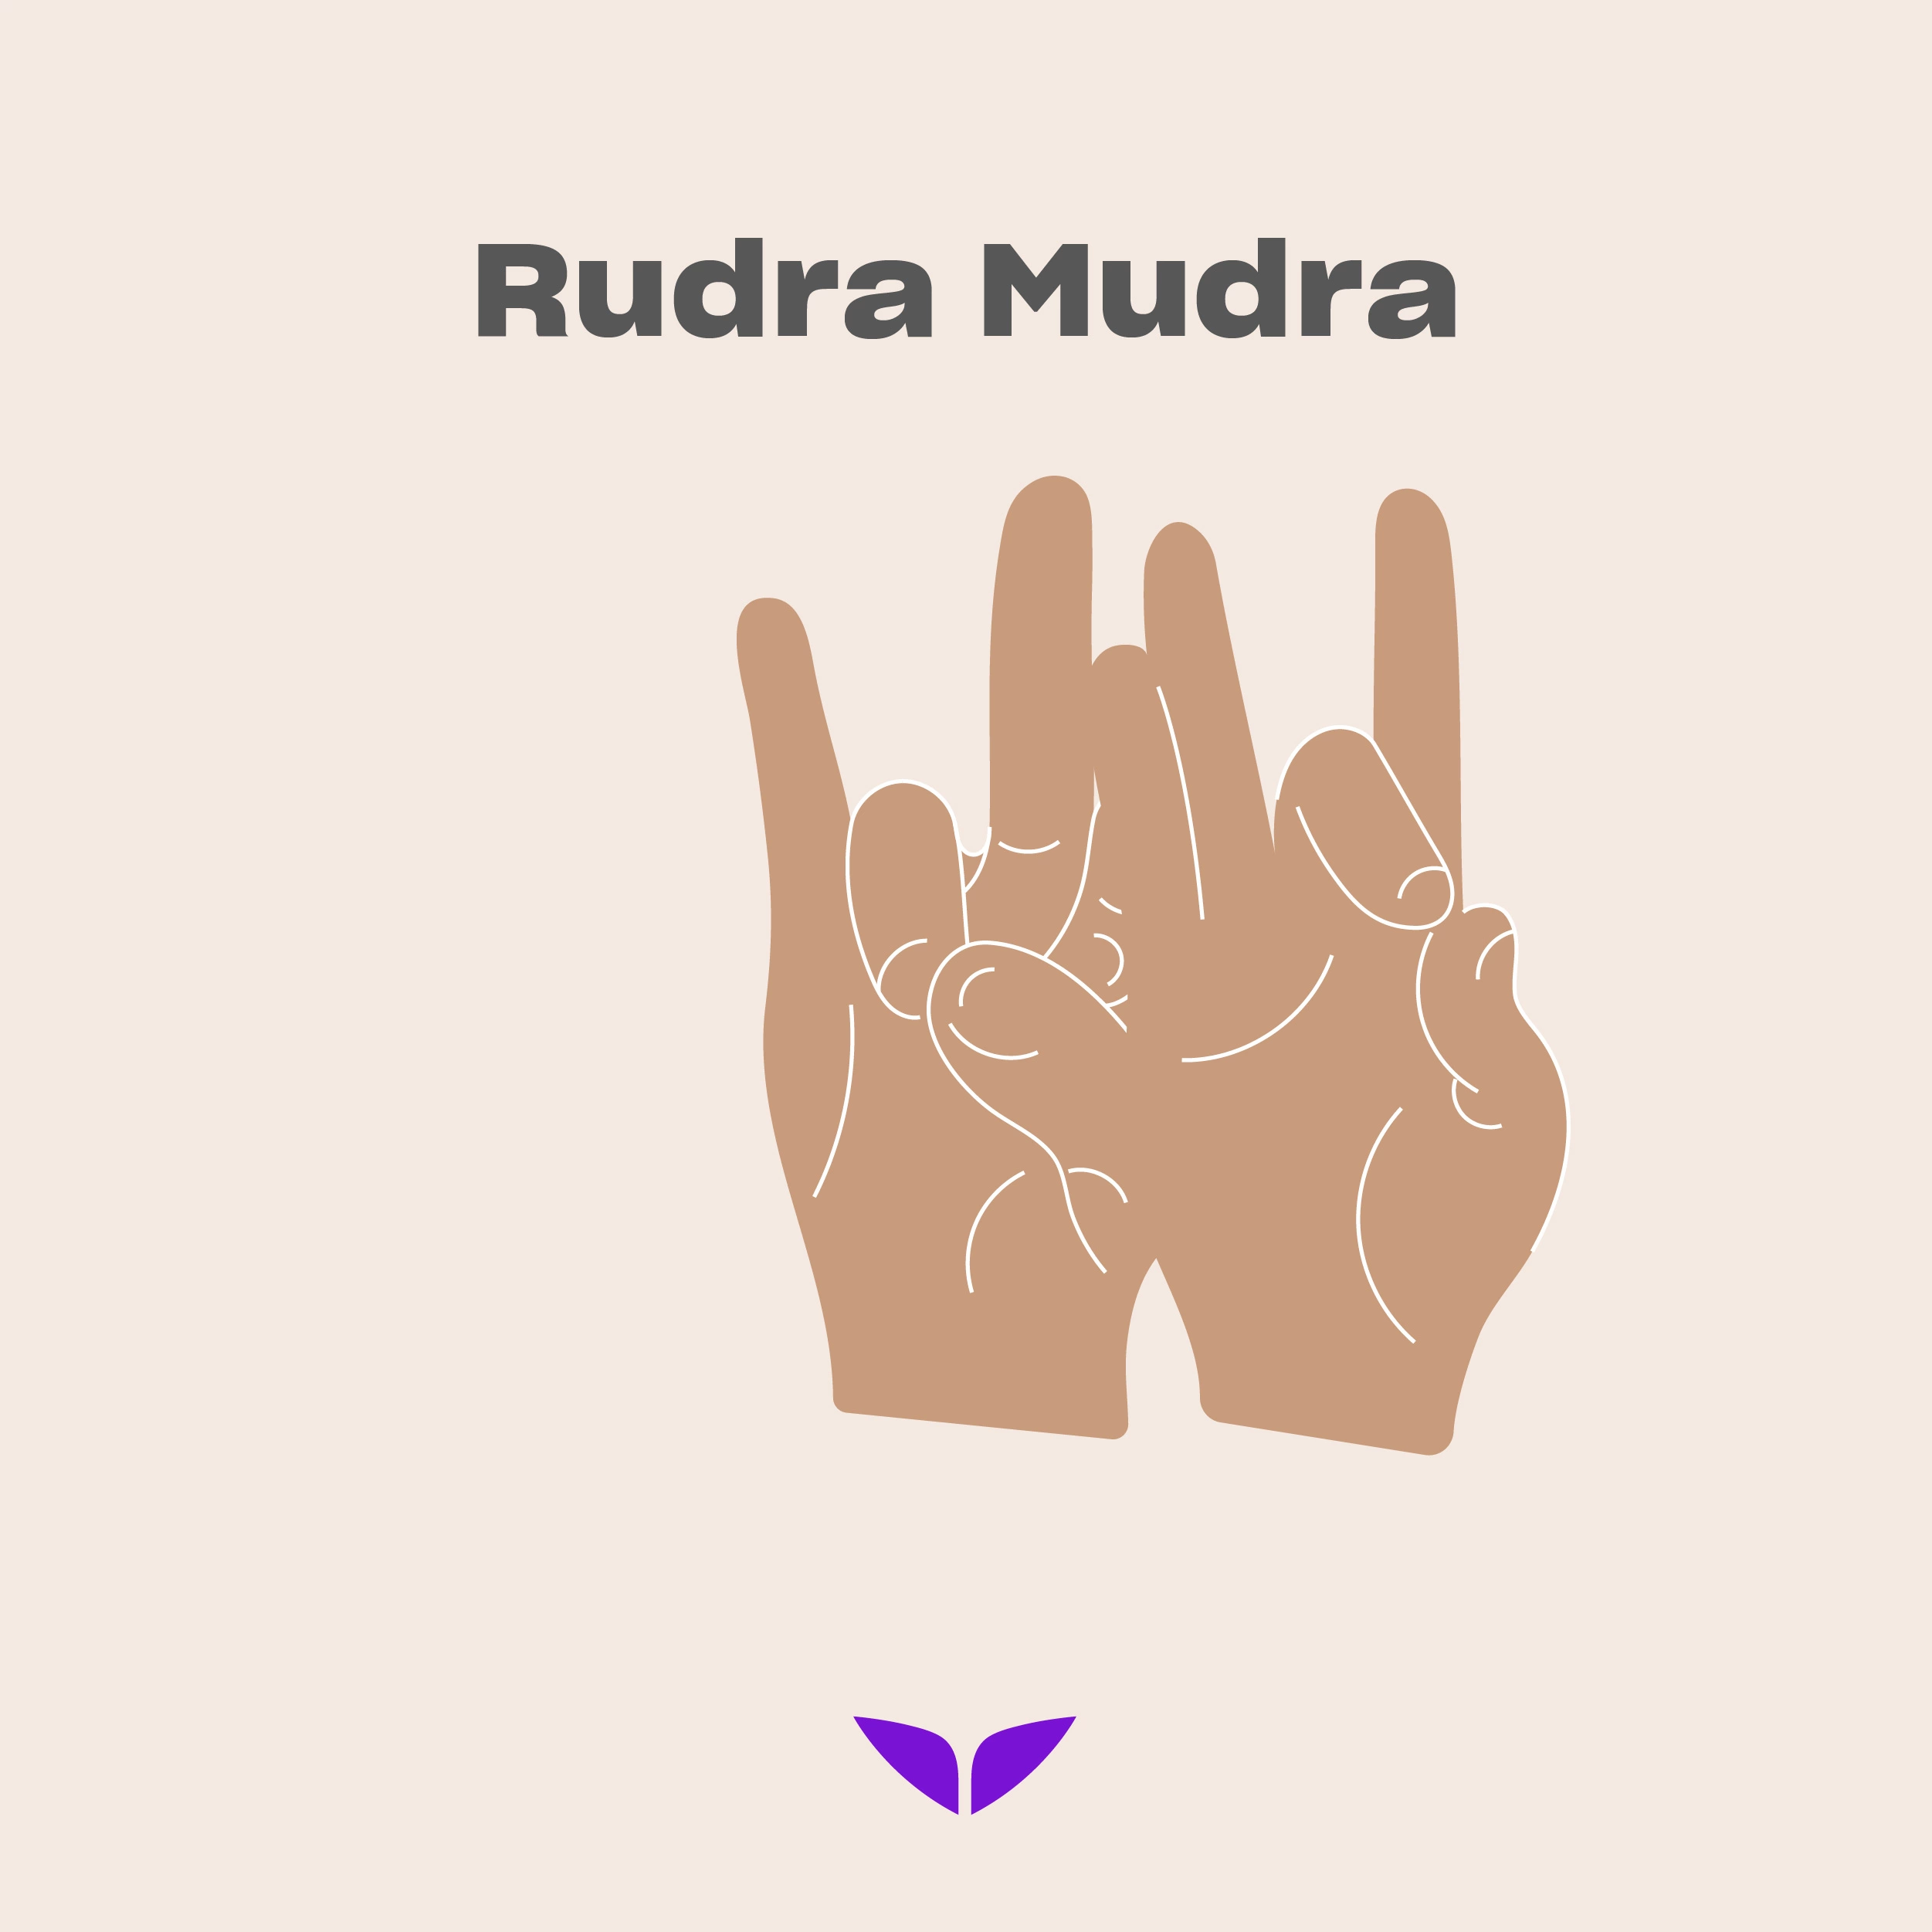 The Rudra mudra: the seal of Shiva